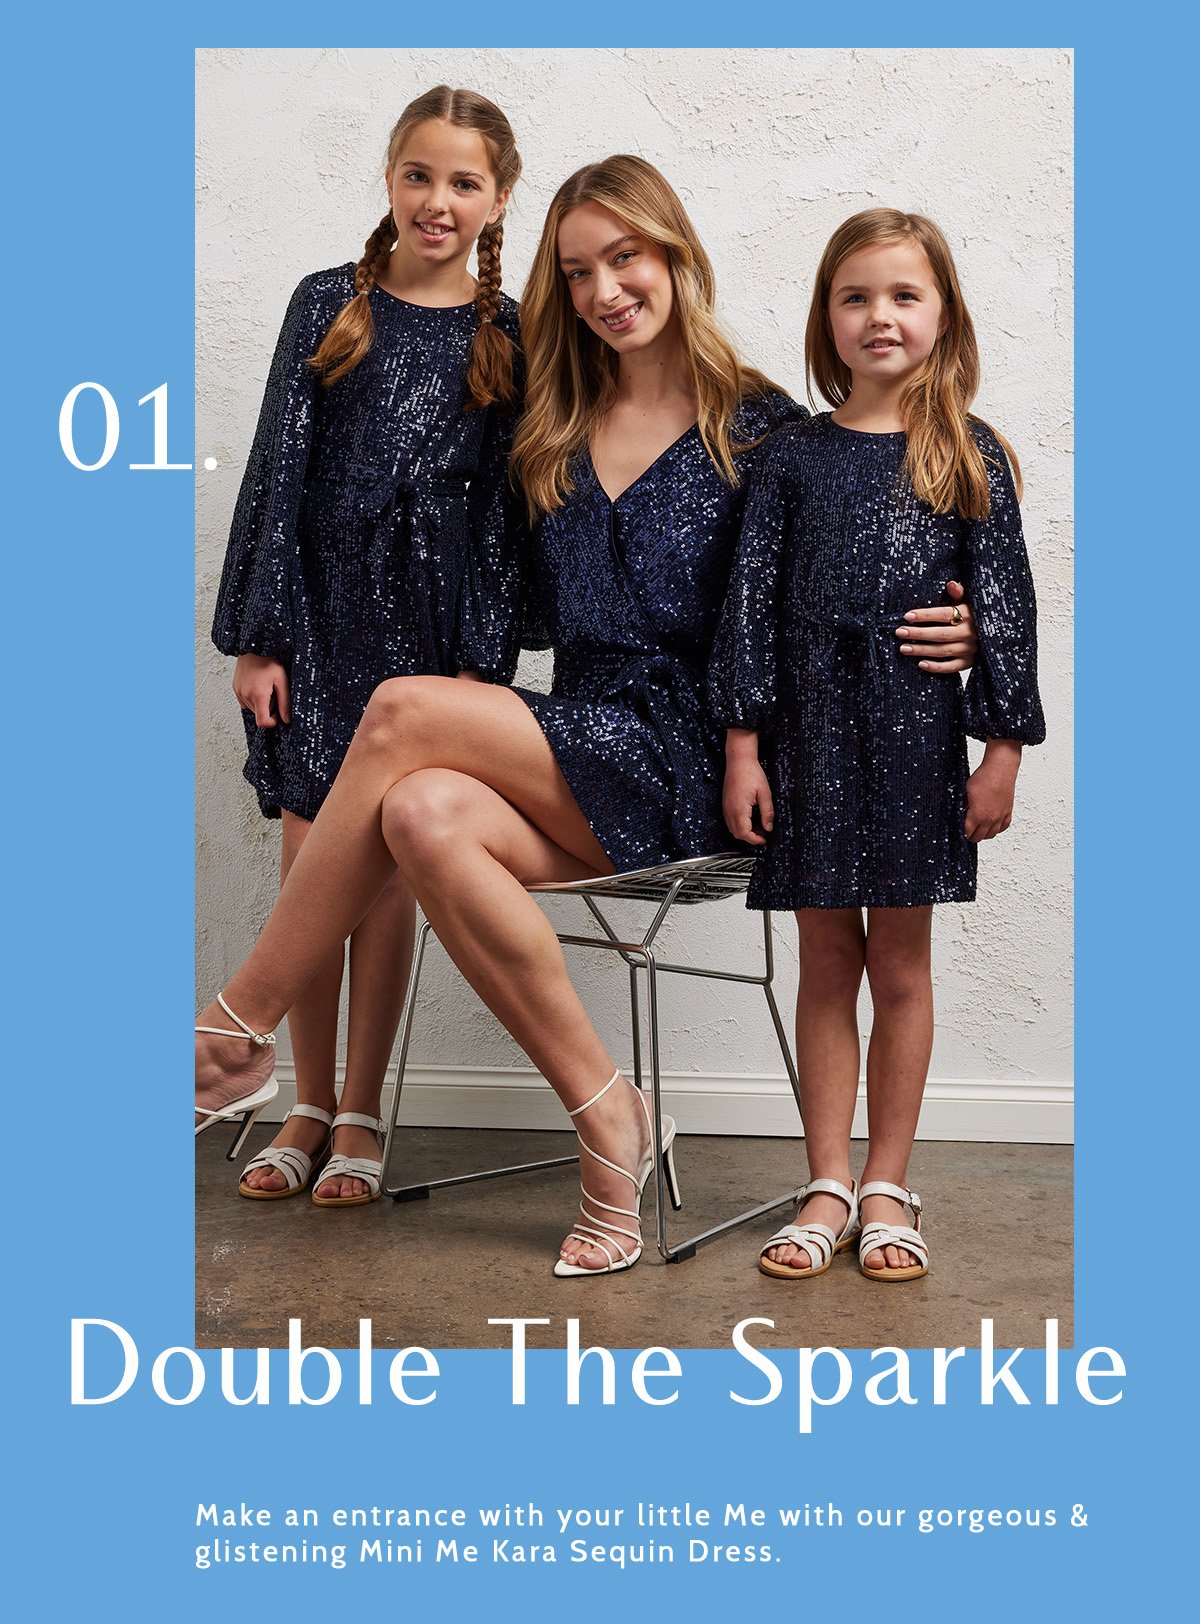 Double the sparkle